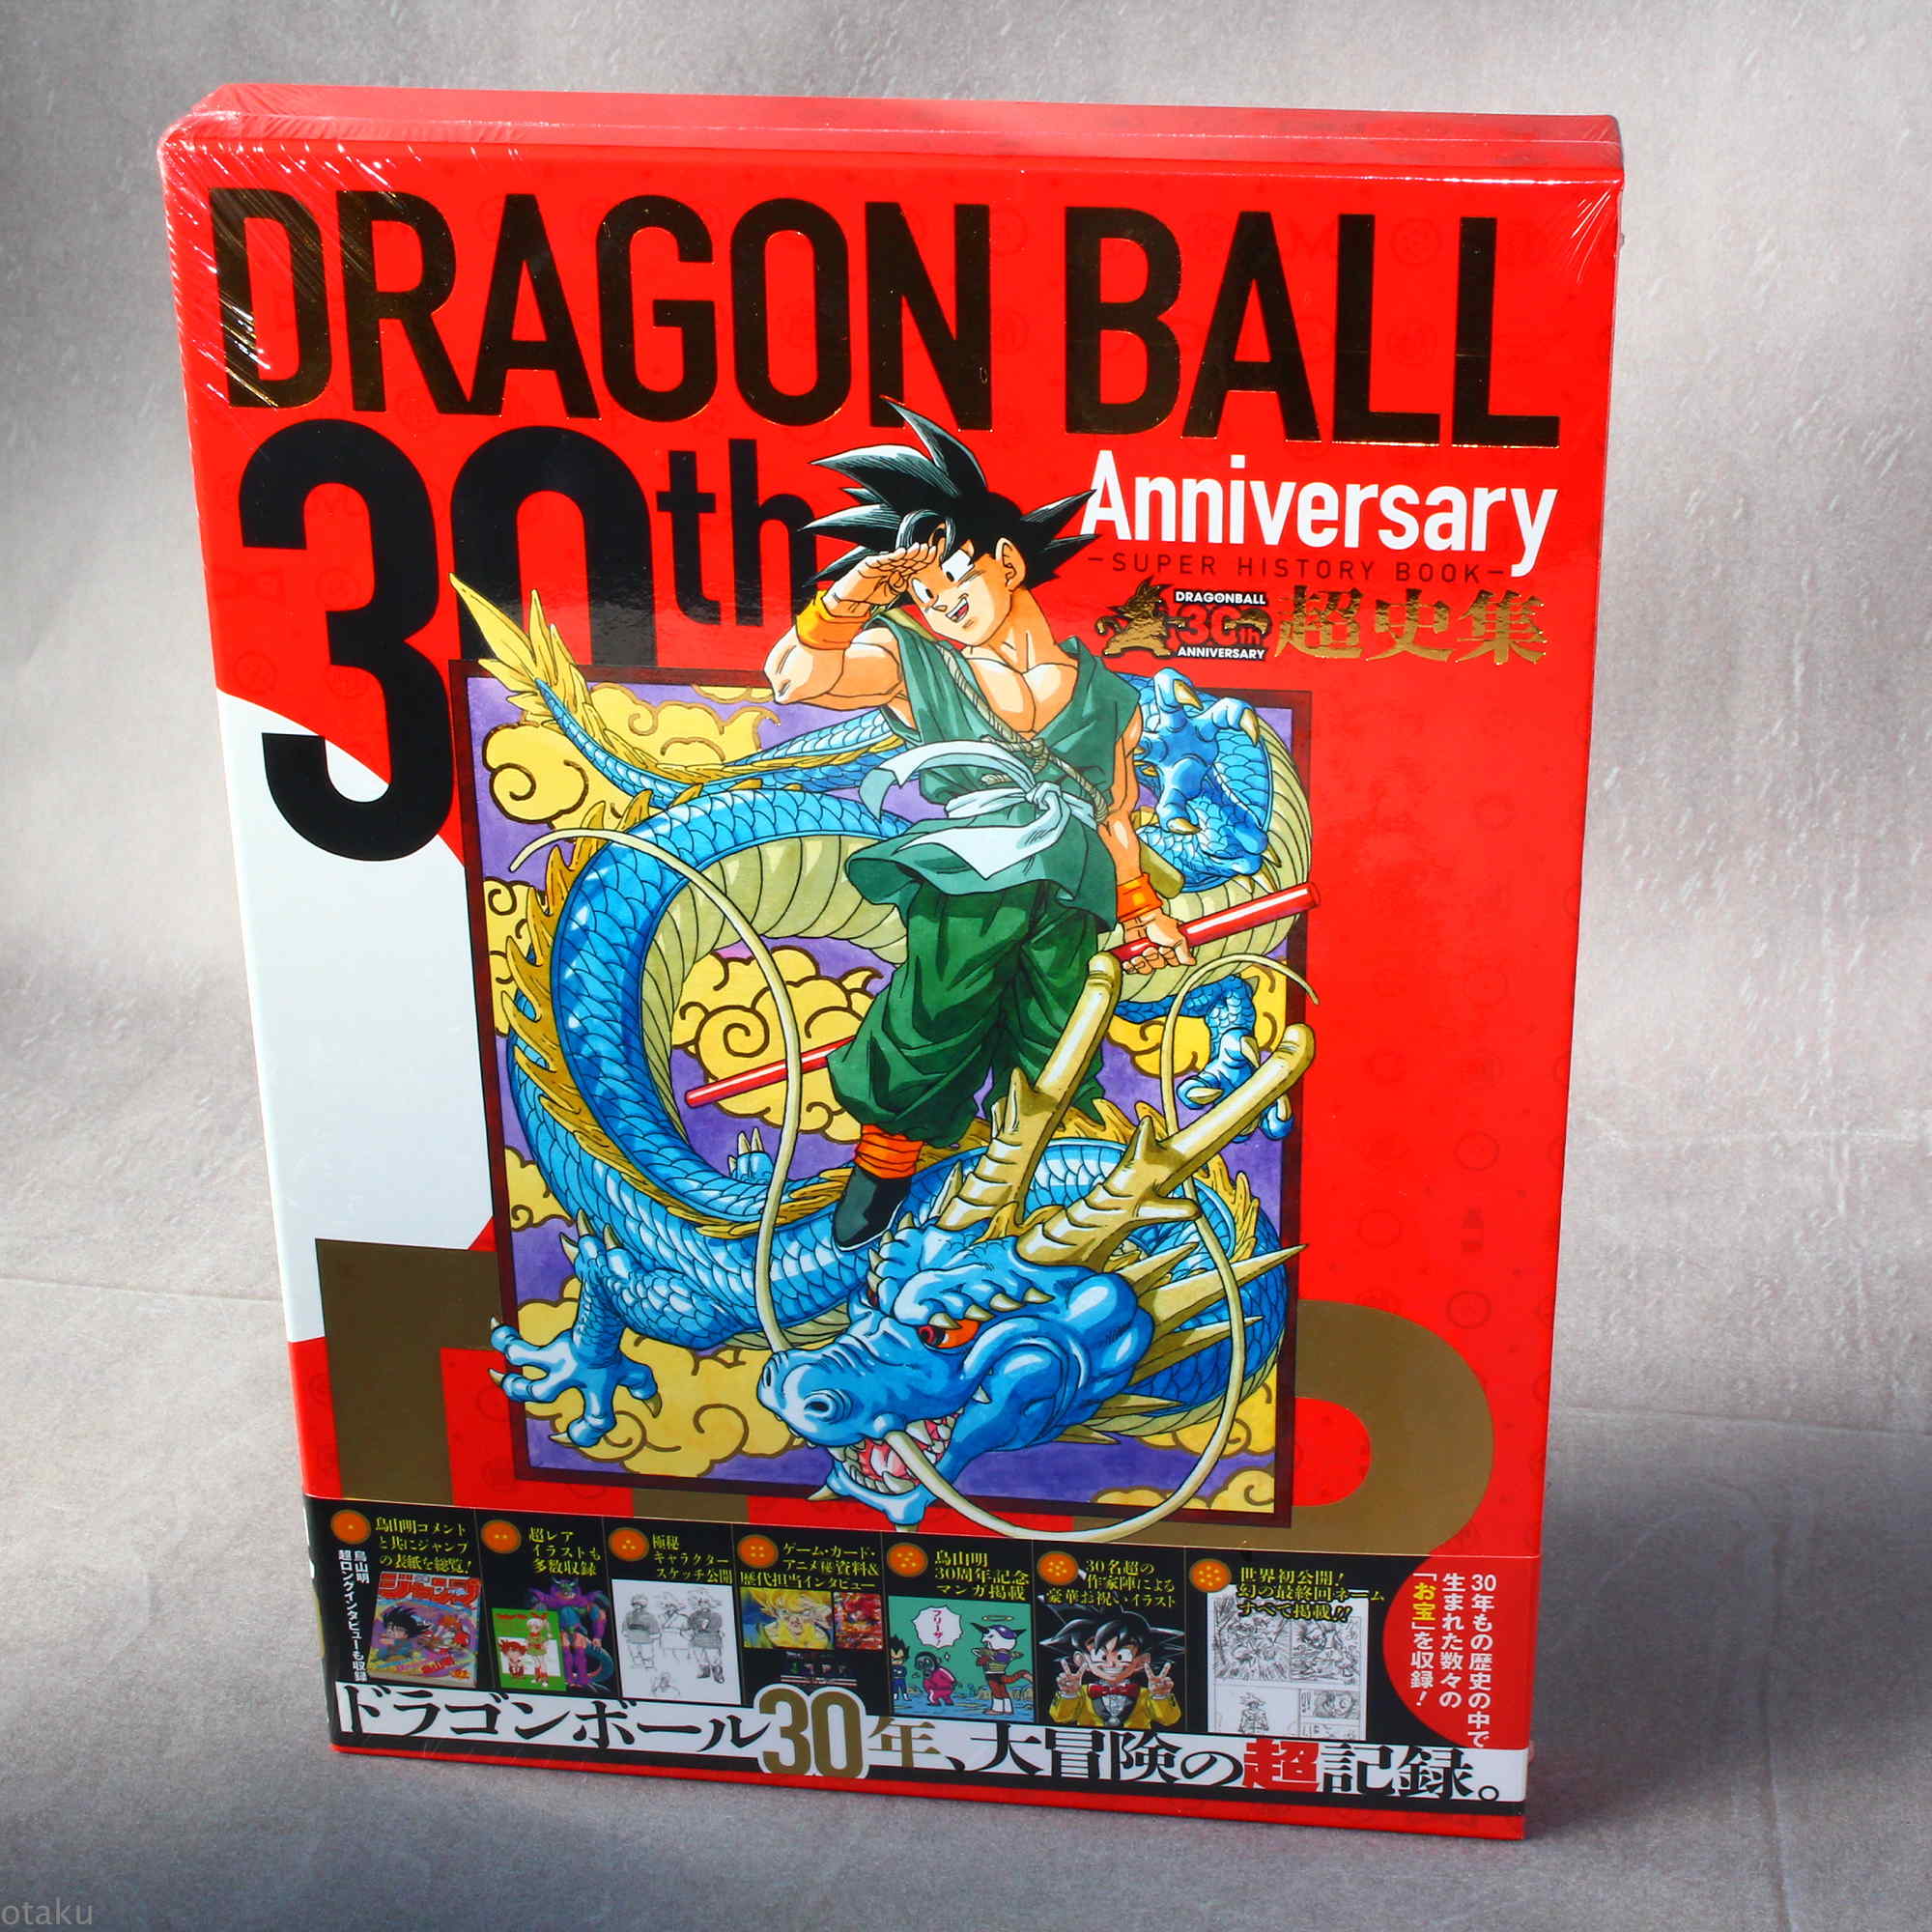  Dragon Ball 30th Anniversary book